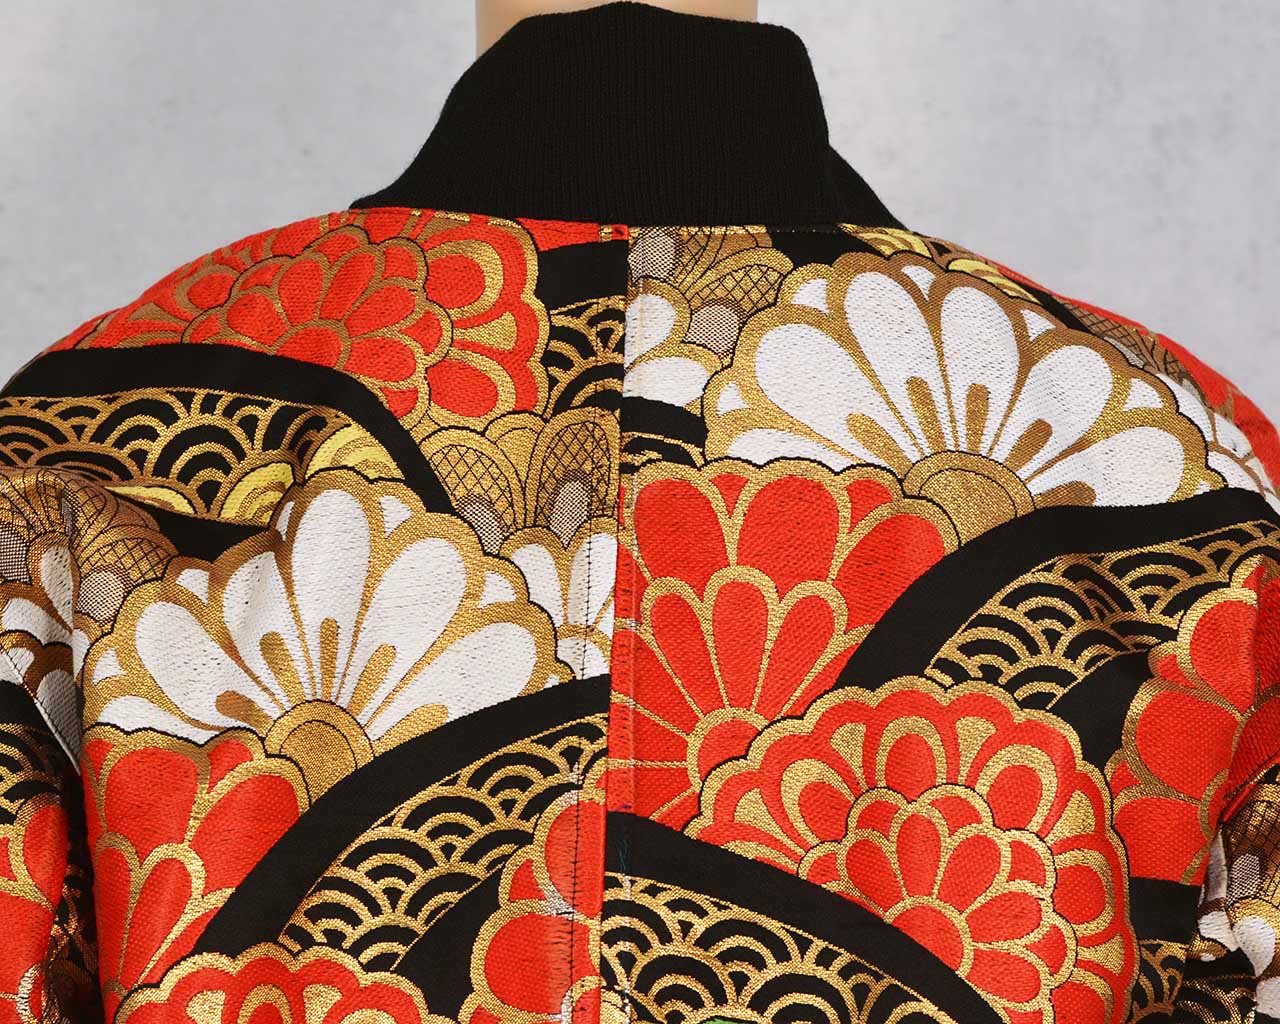 Kimono remake blouson for stage costume